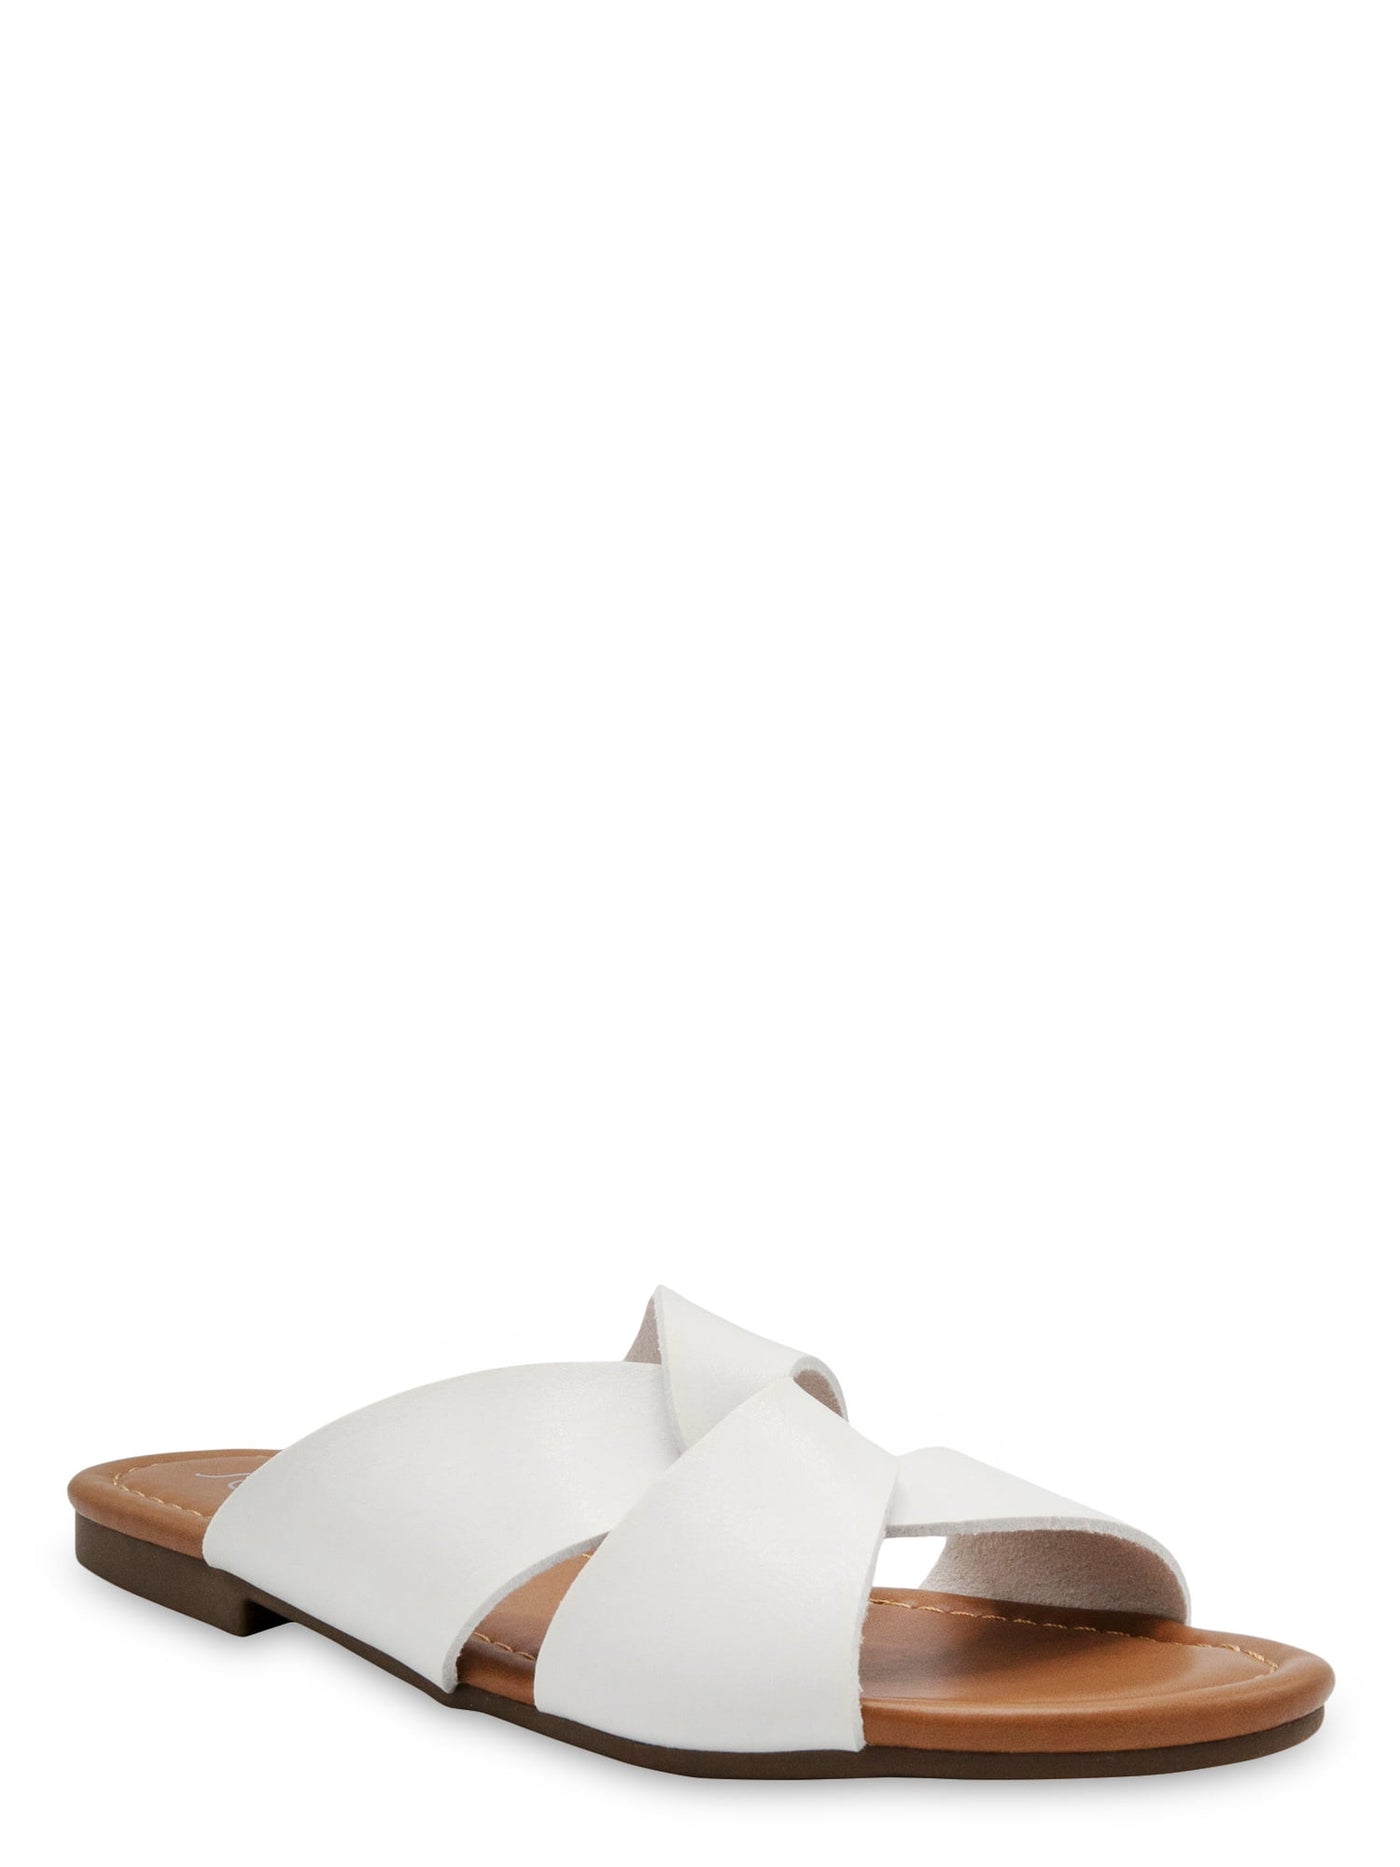 SUGAR Womens White Crisscross Straps Comfort Woven Olena Round Toe Block Heel Slip On Slide Sandals Shoes 8.5 M